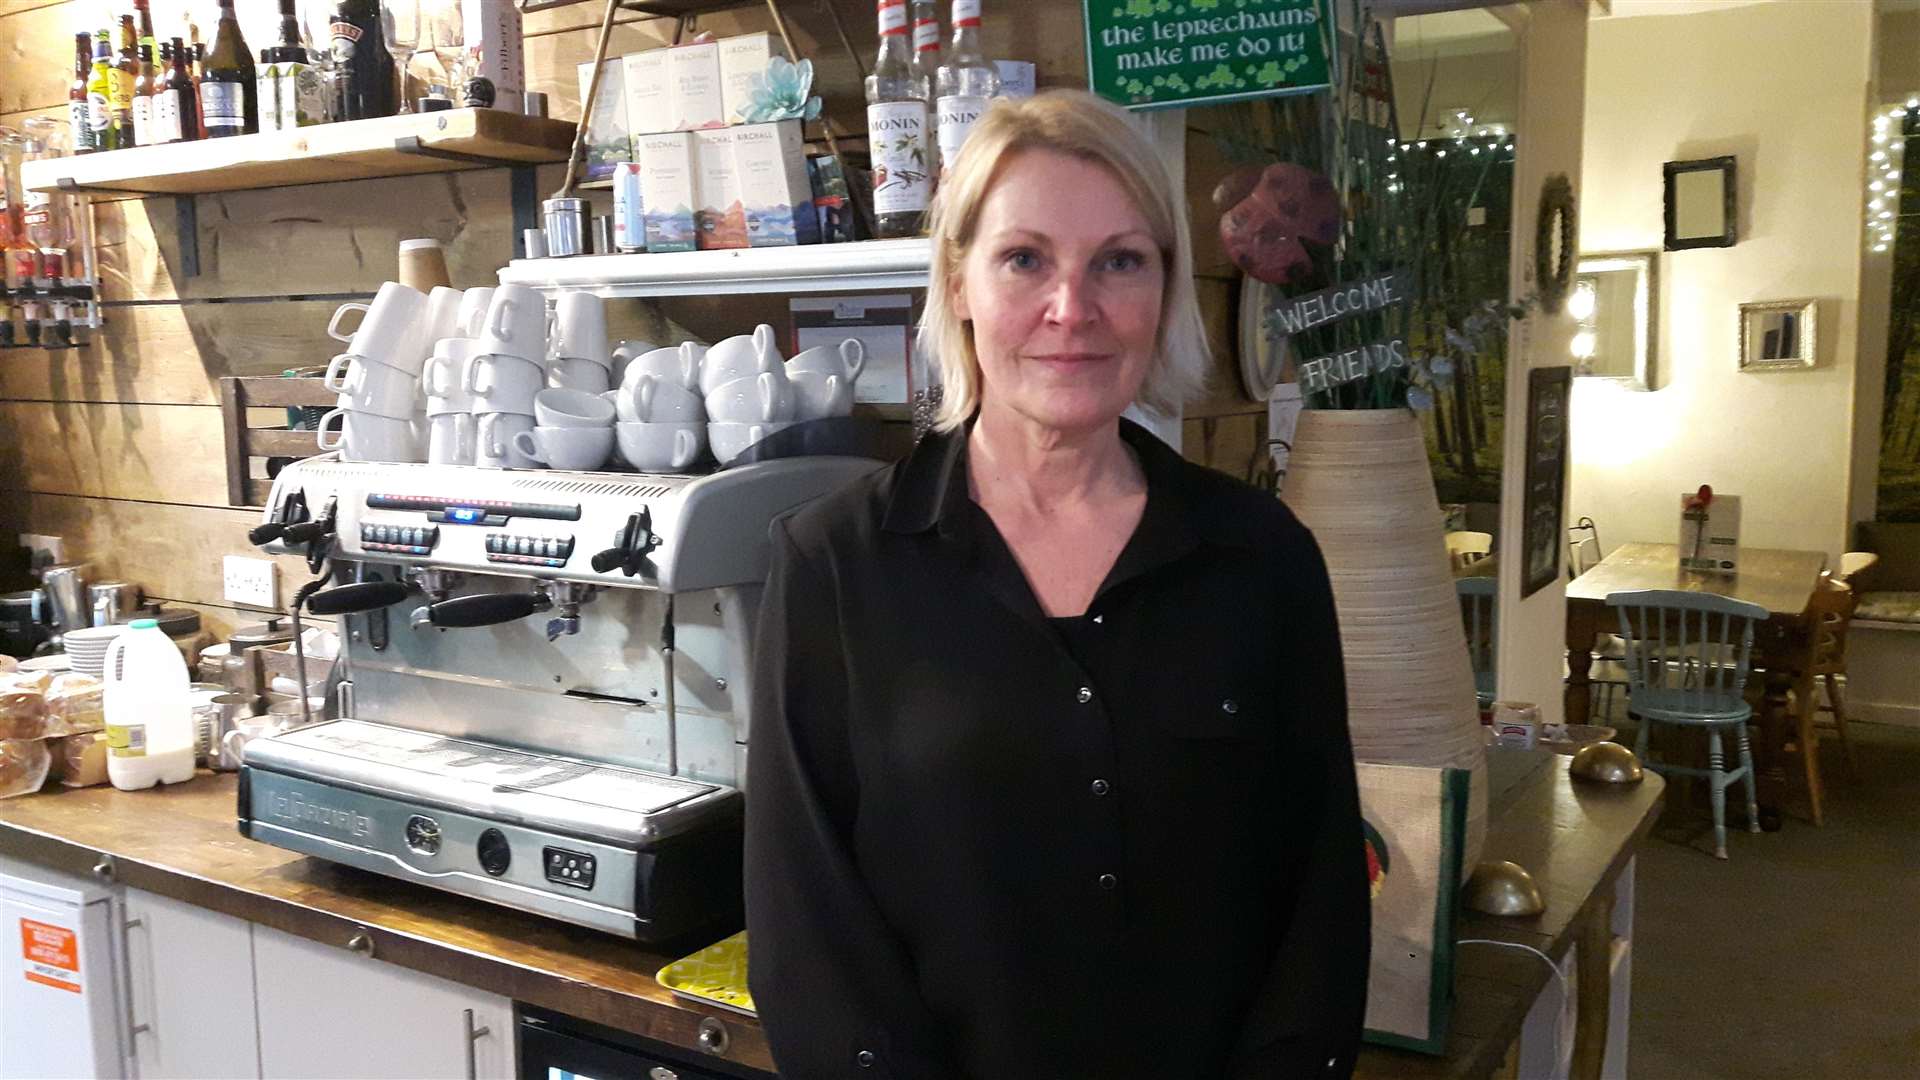 Lisa Welancer of the Eden sandwich shop and coffee bar